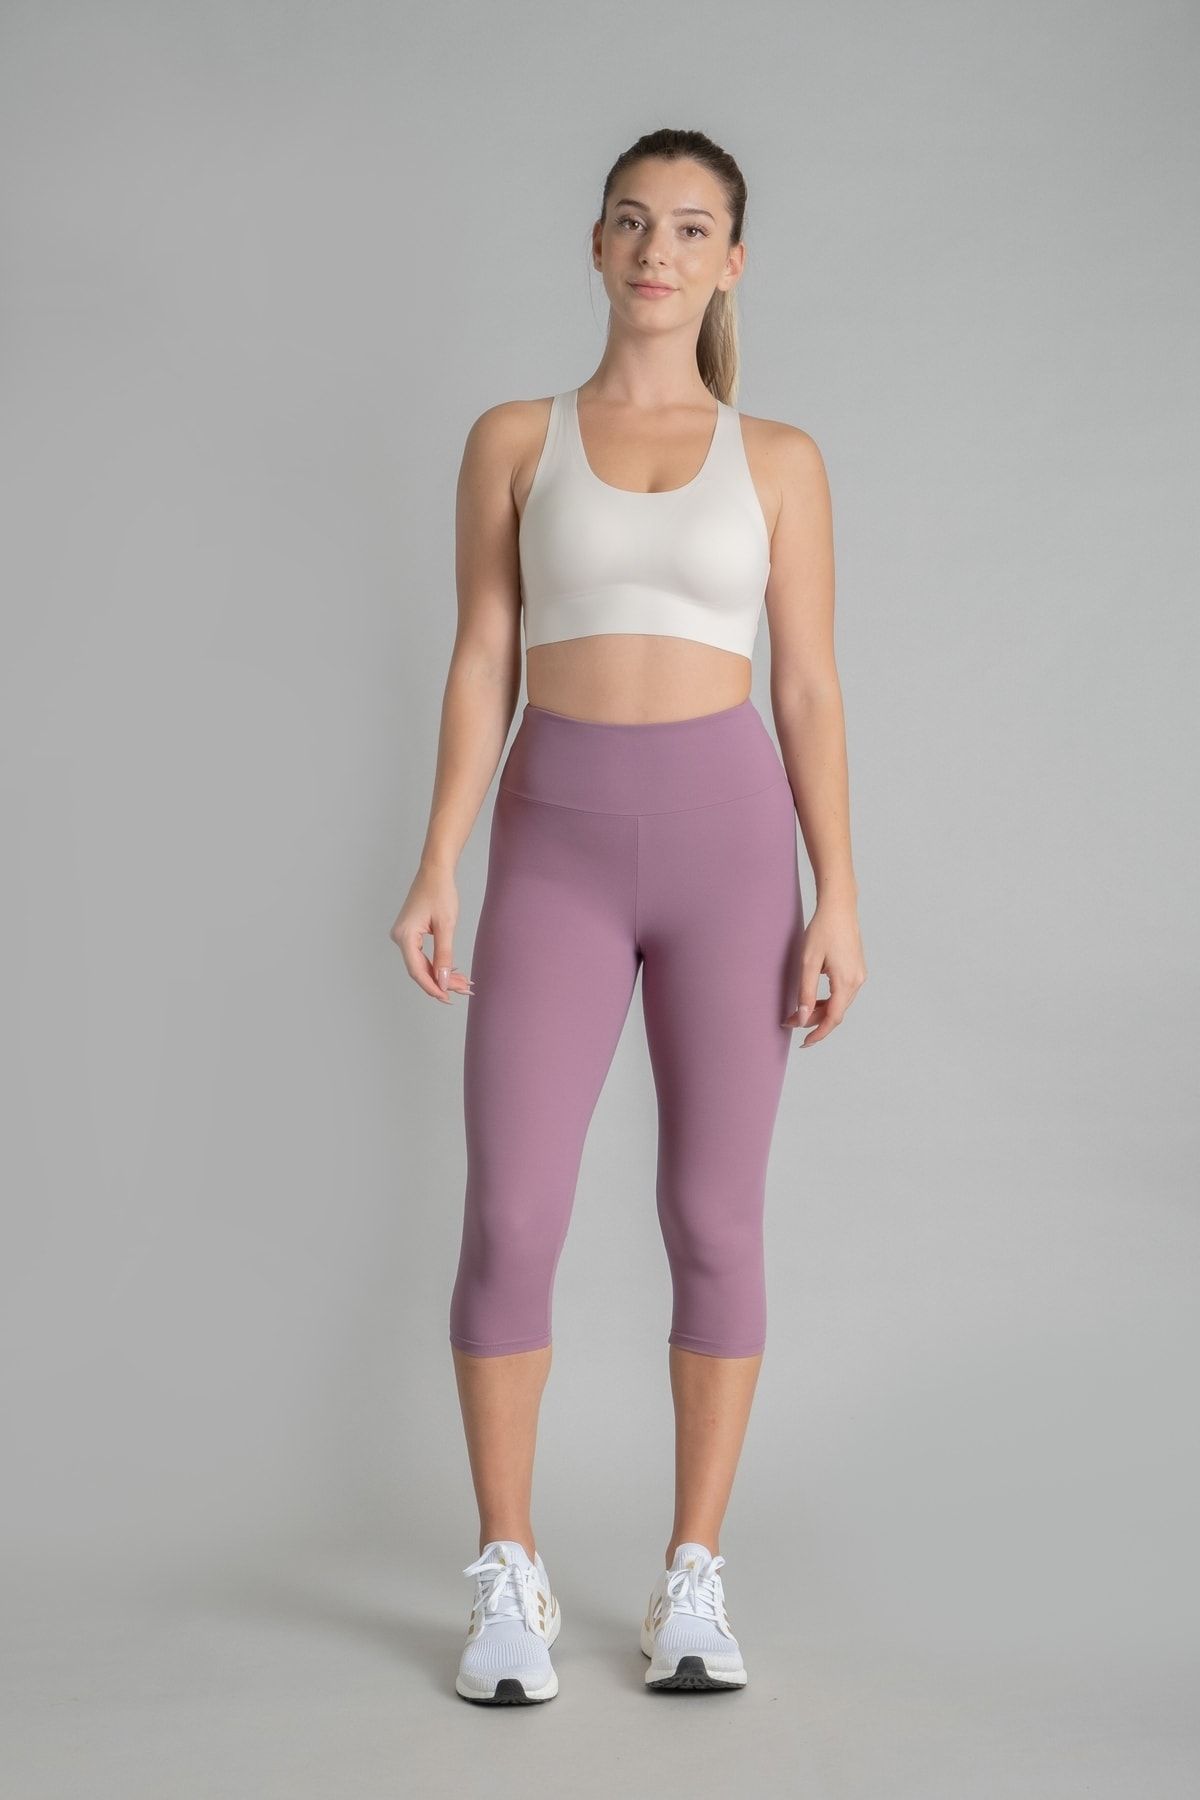 Vienfit Women's High Waist Push Up Tights Yoga Leggings Lilac 7/8 Length -  Trendyol